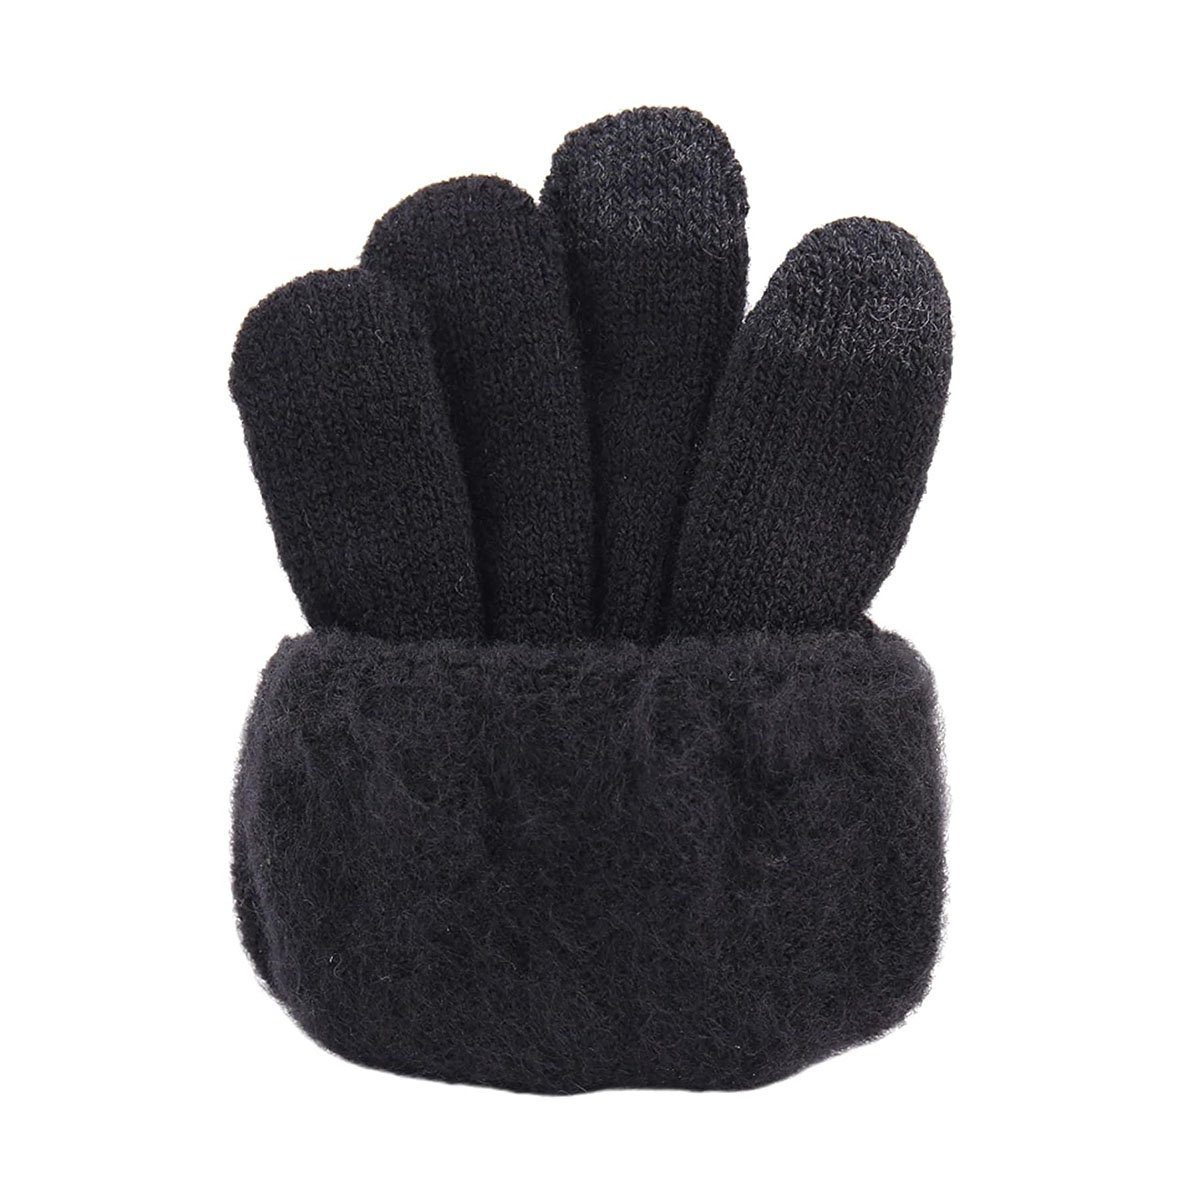 Winter Herren Damen Strickhandschuhe GelldG Schwarz(stil2) Touchscreen, Thermo Handschuhe Strickhandschuhe